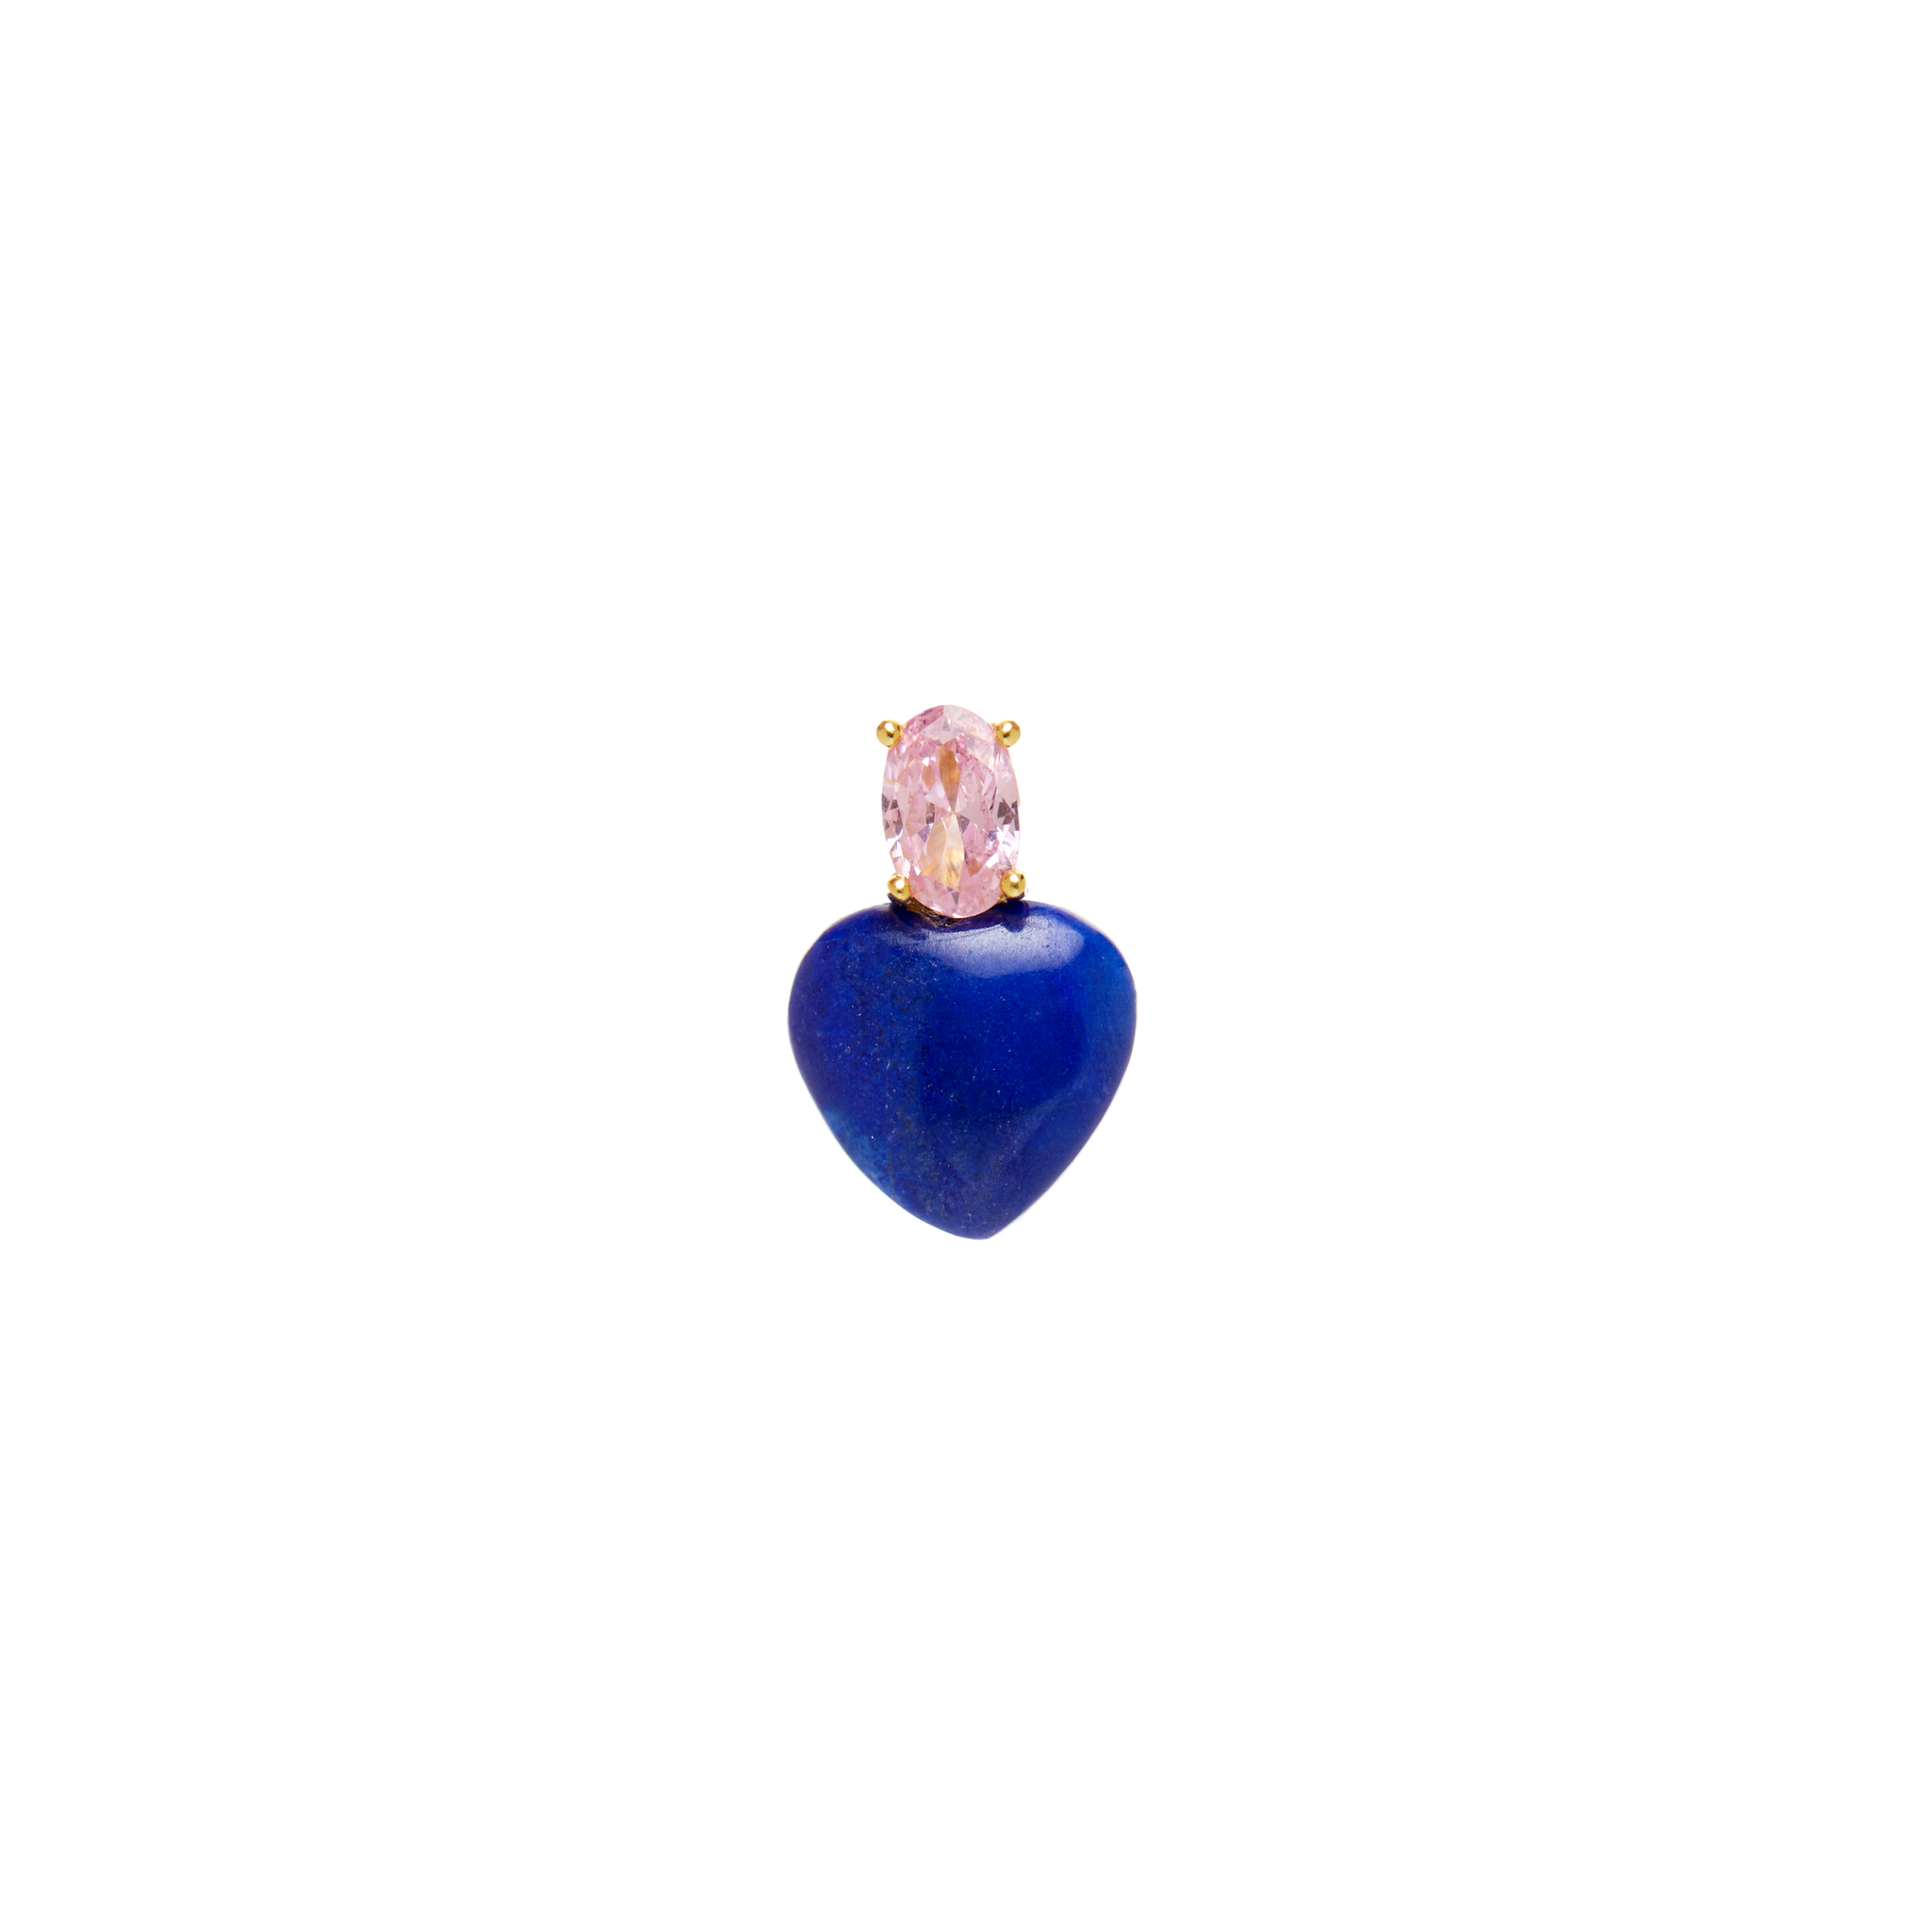 wilhelmina garcia серьга fairy stardust earring – blue WILHELMINA GARCIA Серьга Tutu Heart Earring